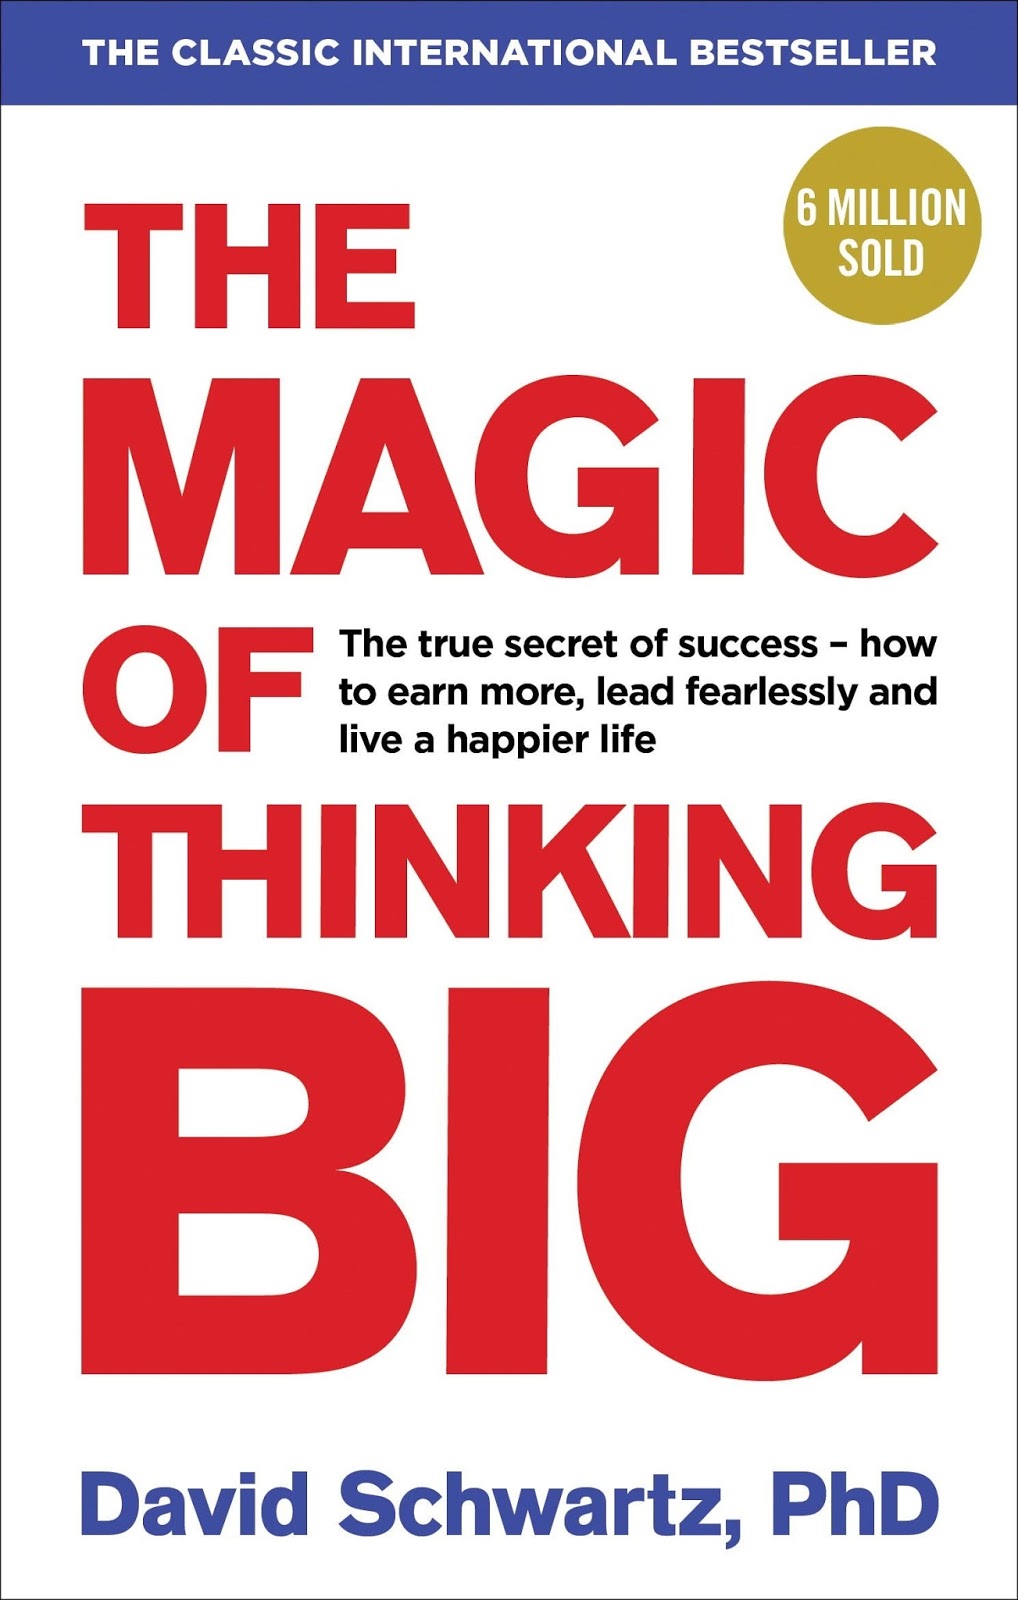 The Magic of Thinking Big PDF ebook by David Schwartz free download